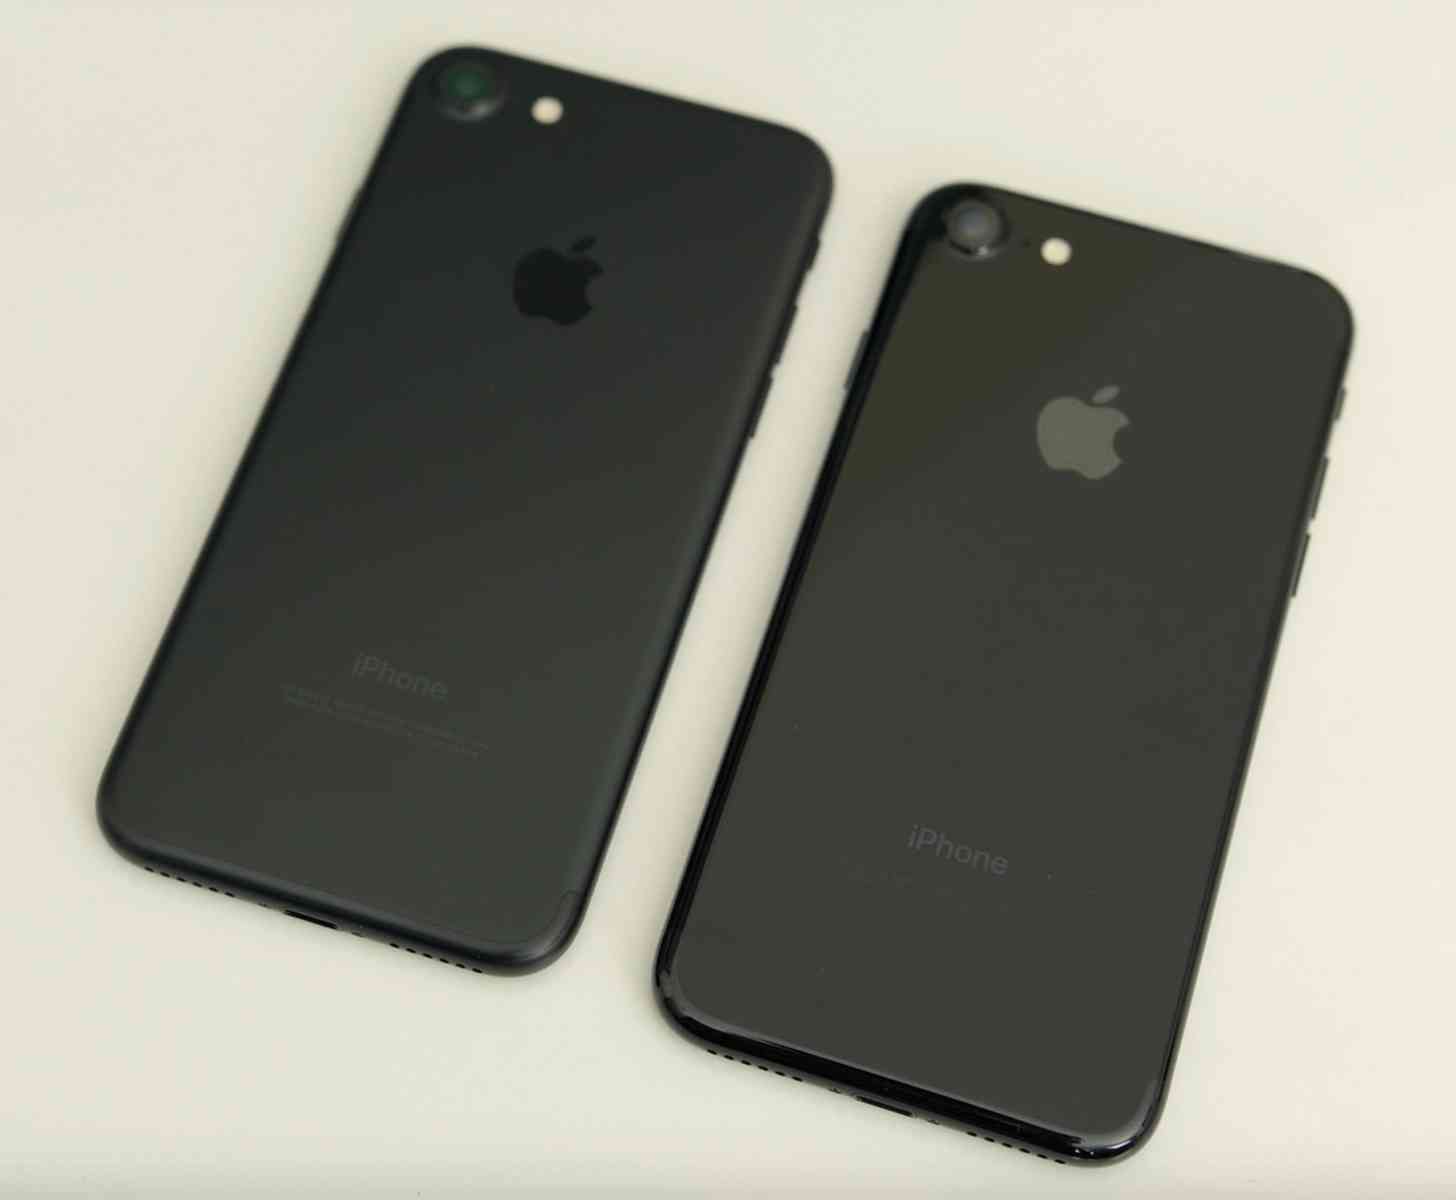 iPhone 7 Black, Jet Black comparison